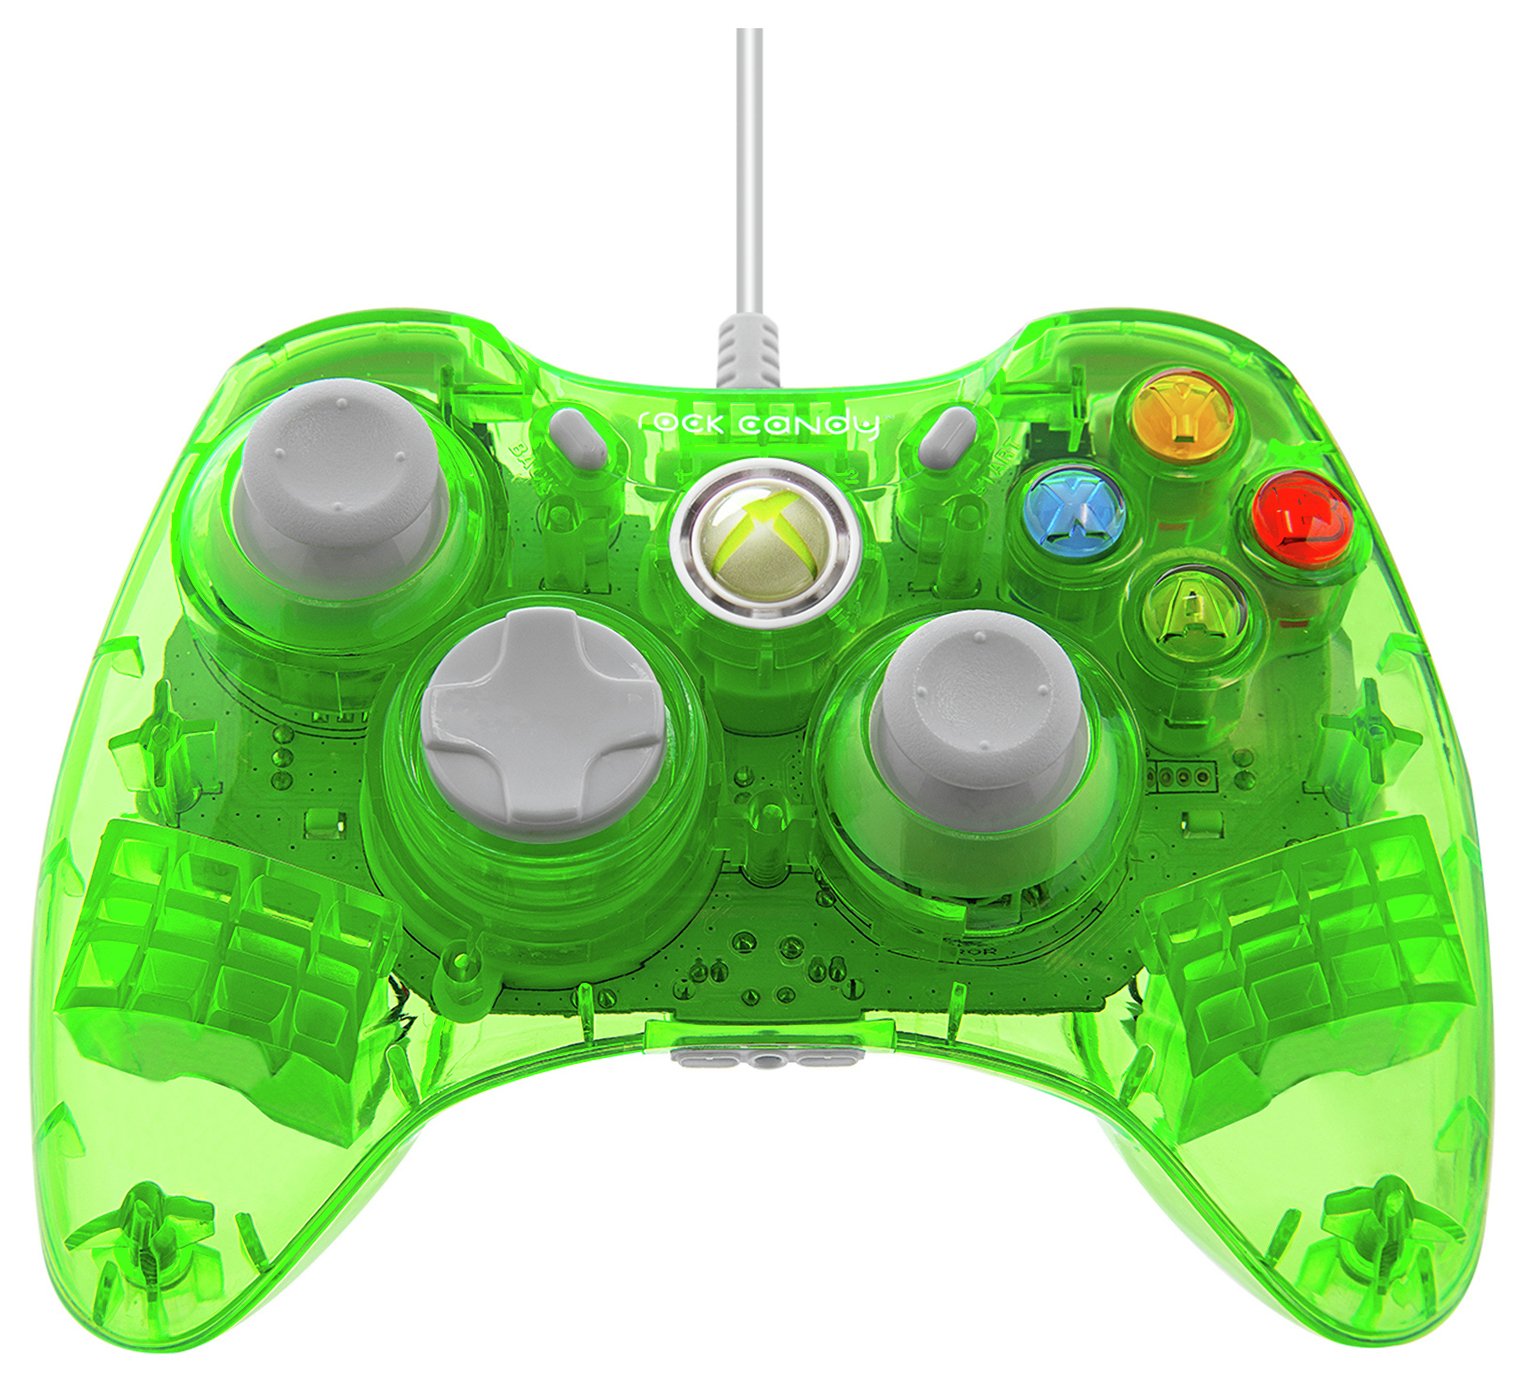 Rock Candy Xbox 360 Controller - Green